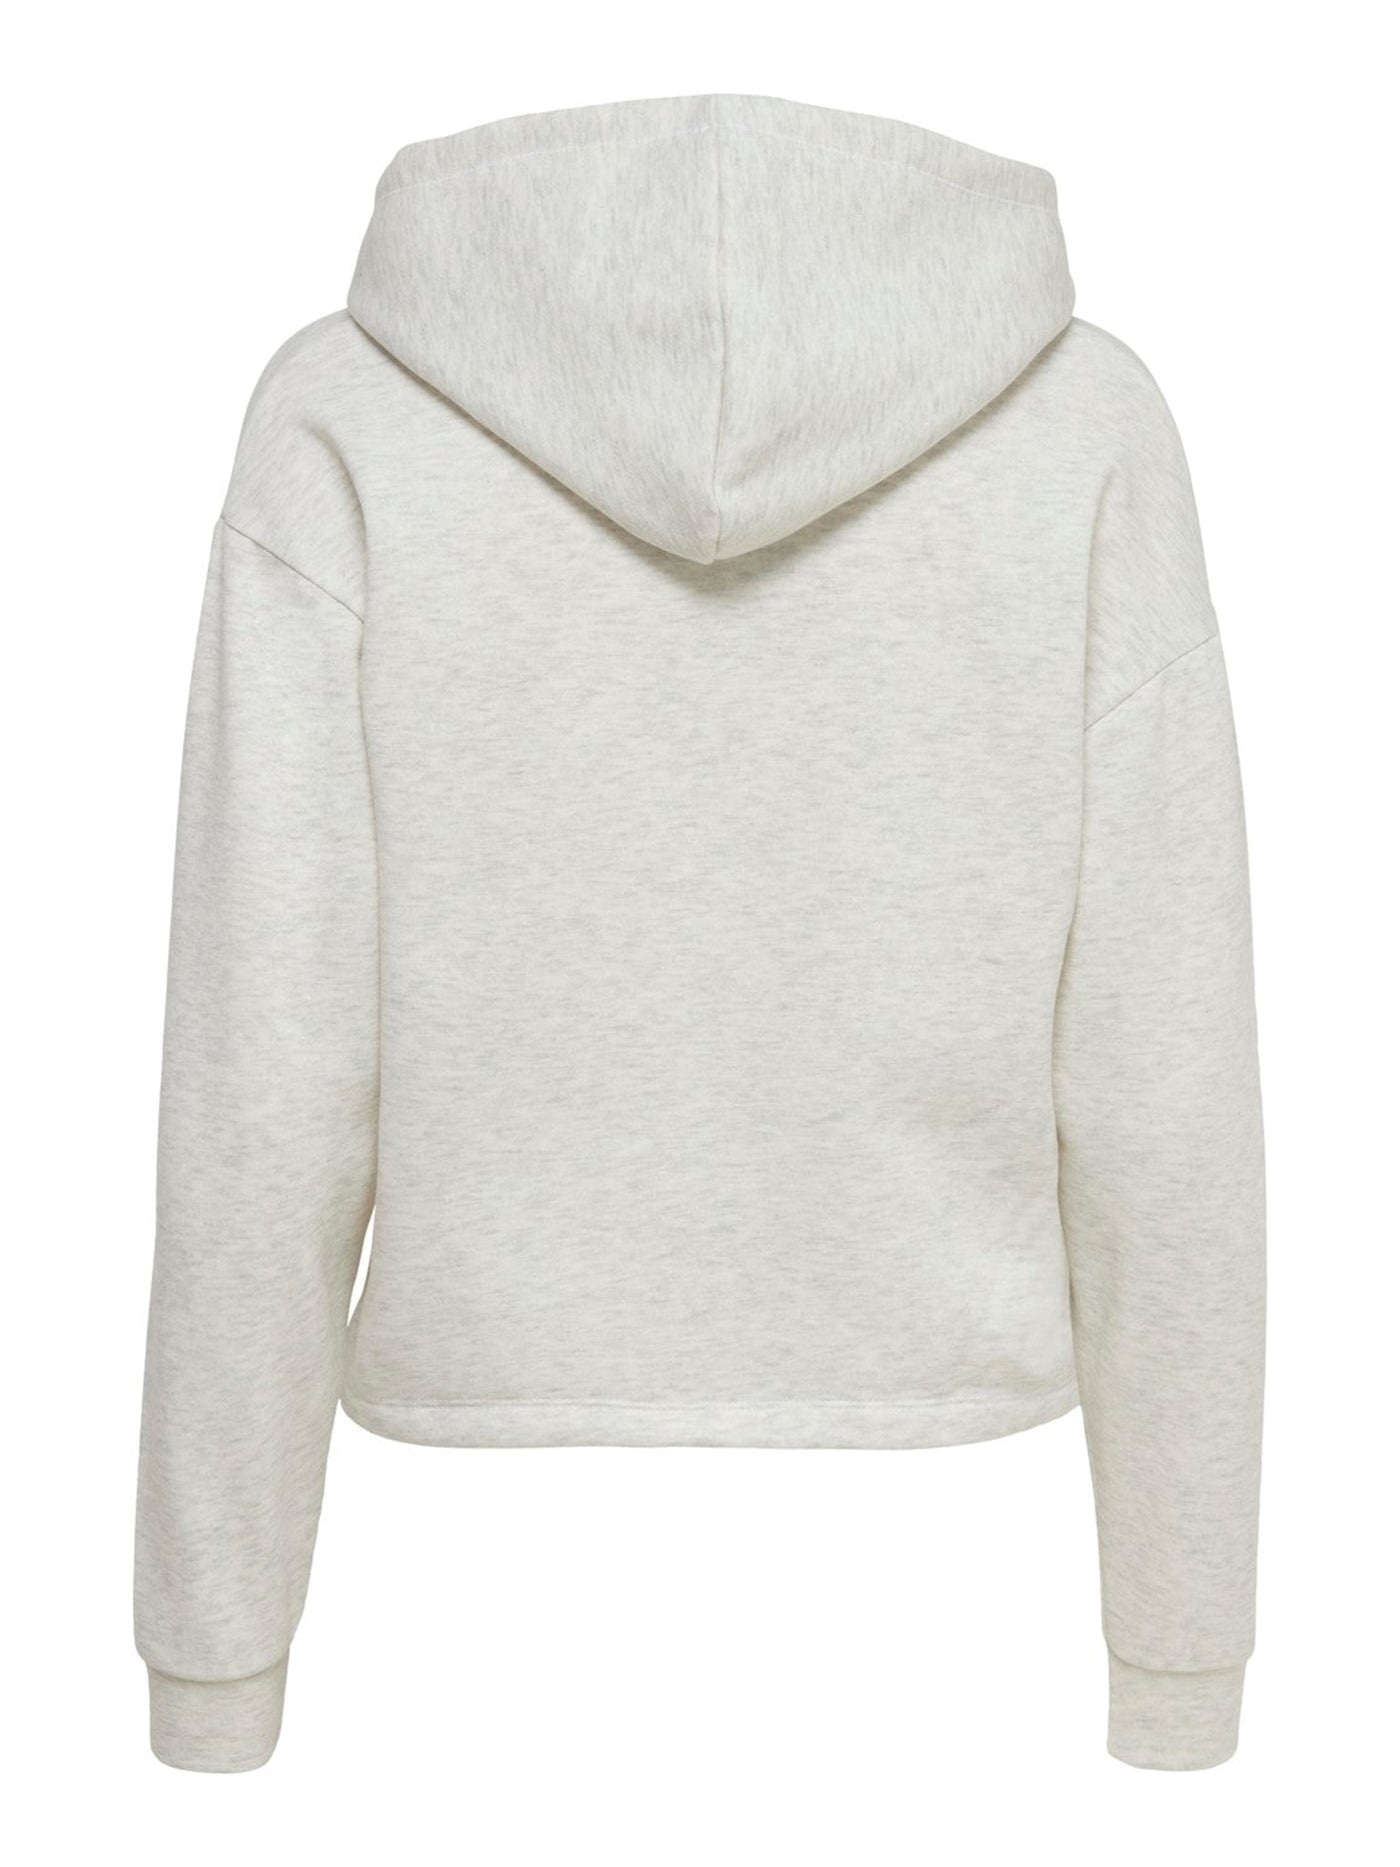 Comfy hoodie - Grå - ONLY 2